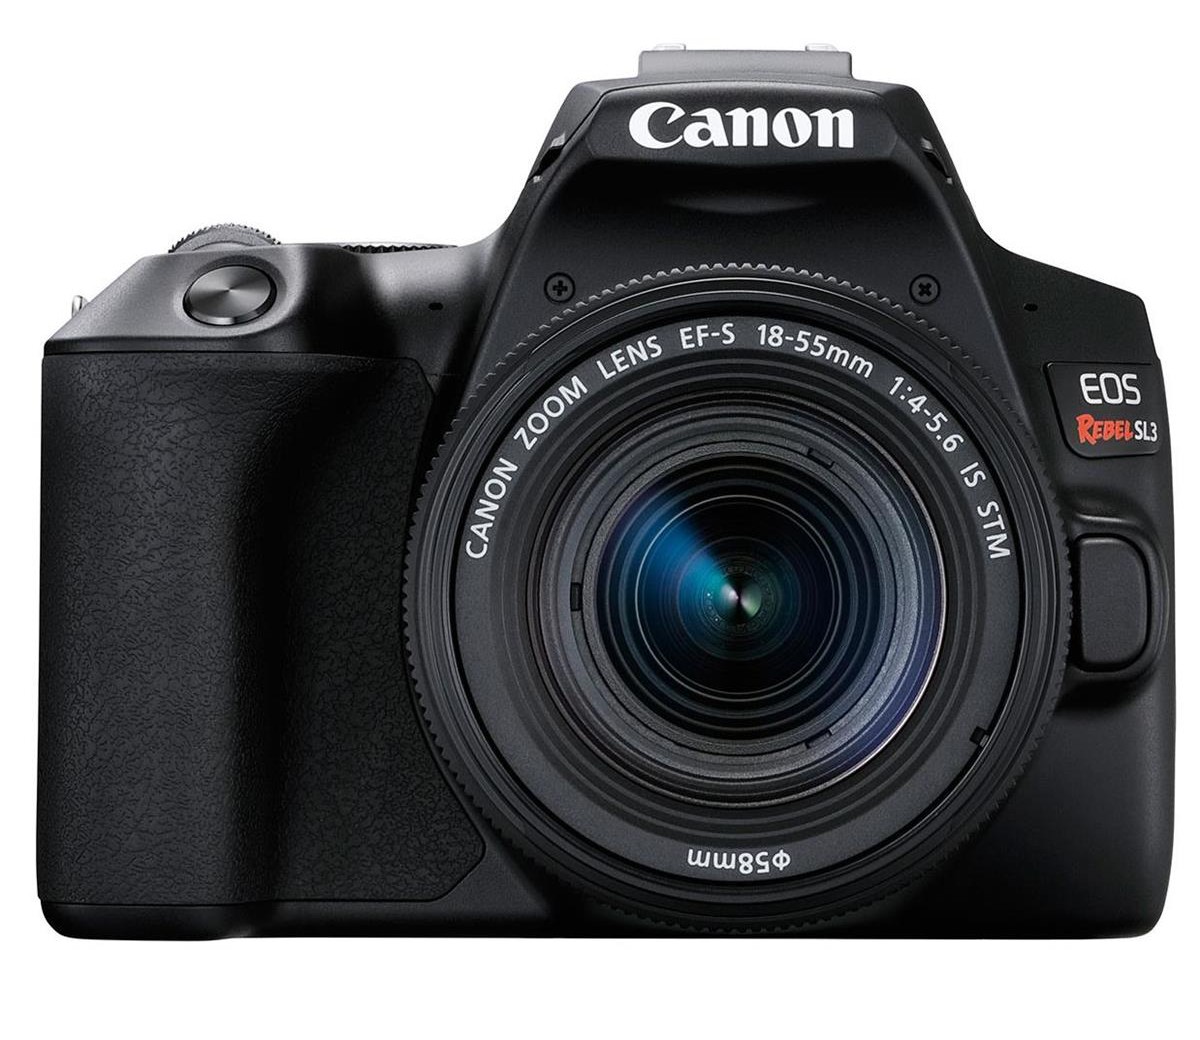 Canon Rebel SL3 Review